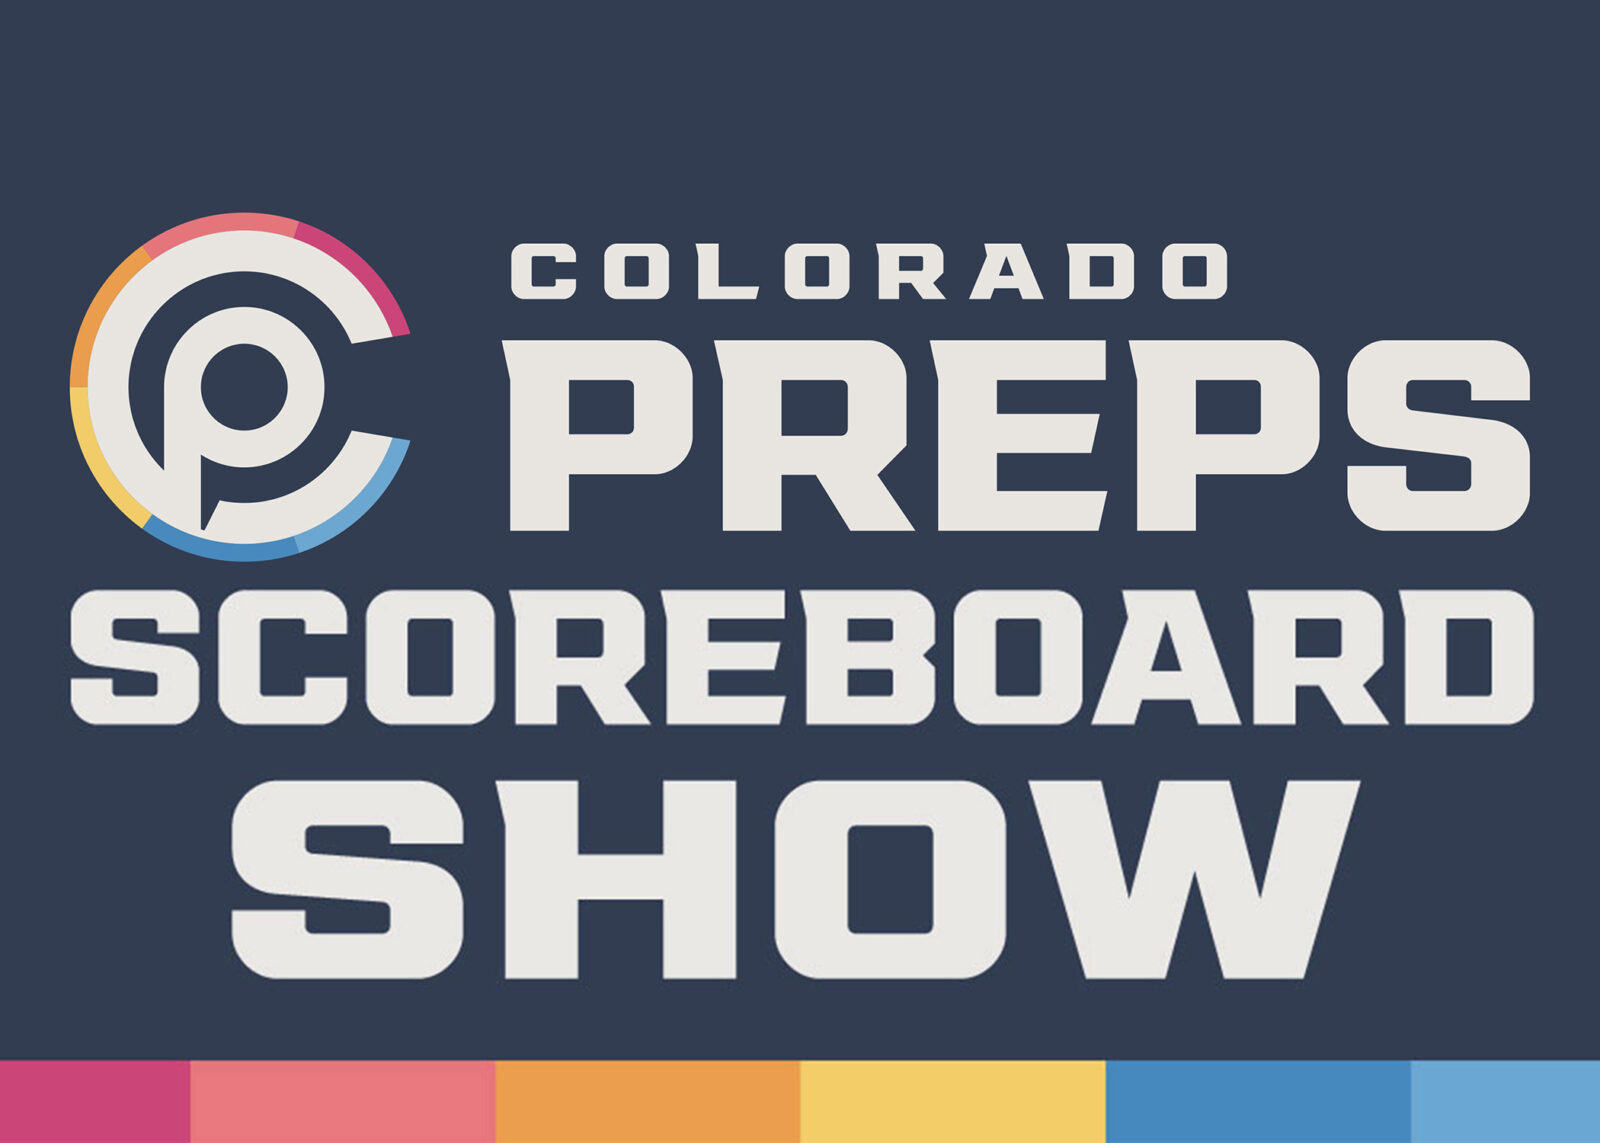 Week 3 of the Colorado Preps Scoreboard Show is live